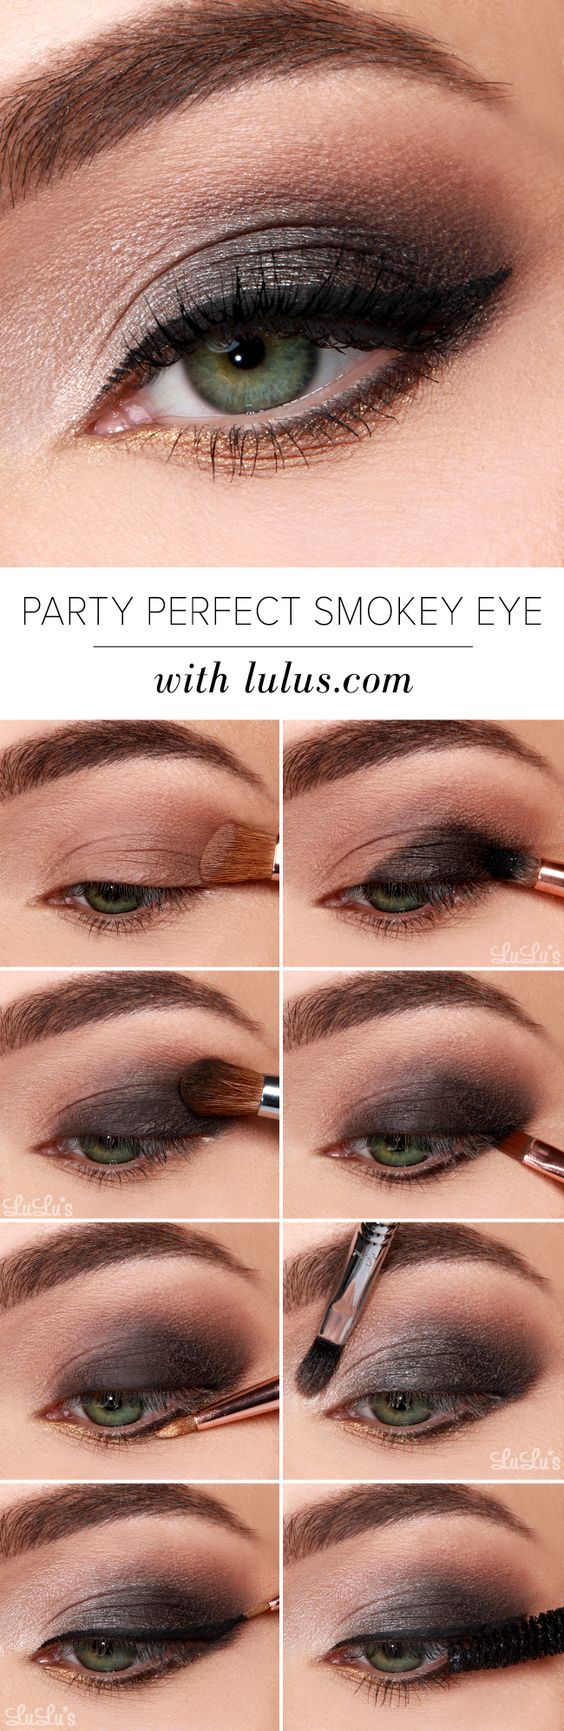 Smokey Eye Makeup For Hazel Eyes 40 Hottest Smokey Eye Makeup Ideas 2019 Smokey Eye Tutorials For